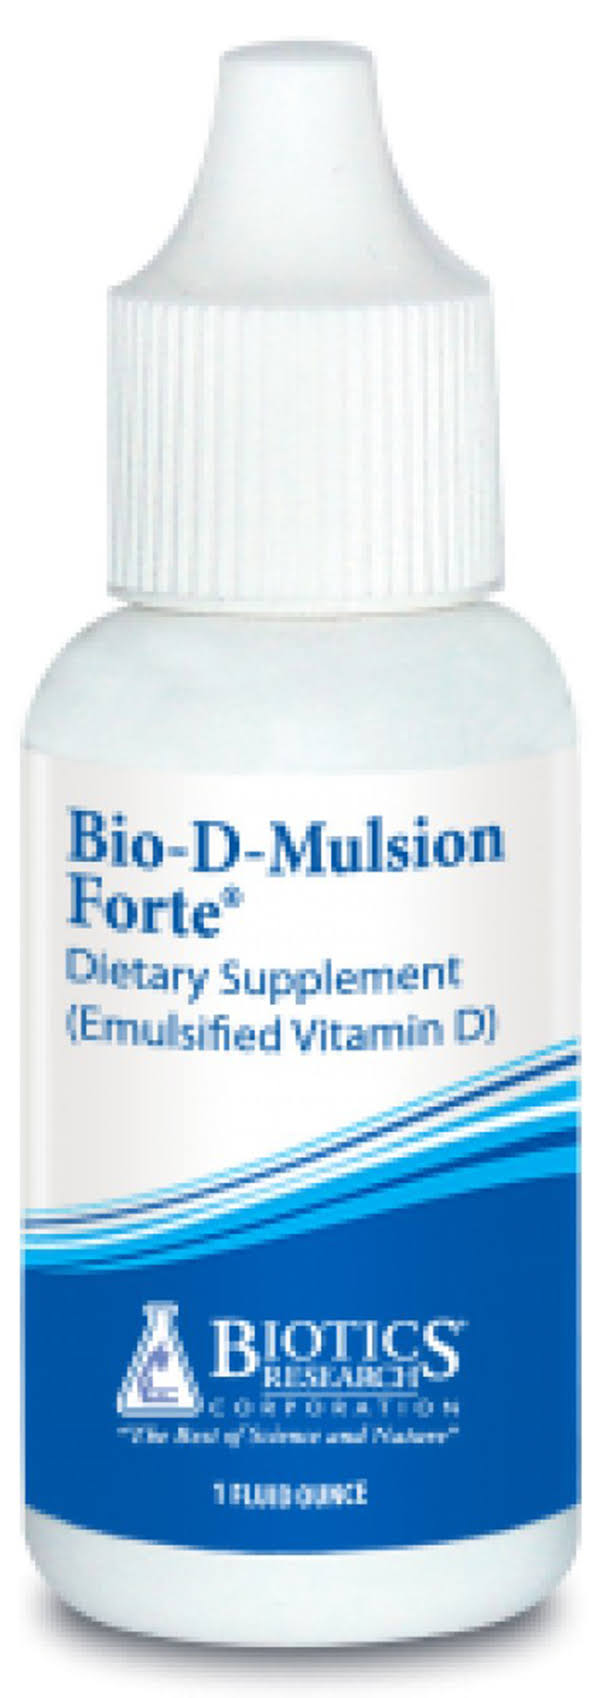 Biotics Research Bio D Mulsion Forte Vitamin D3 Dietary Supplement - 1oz